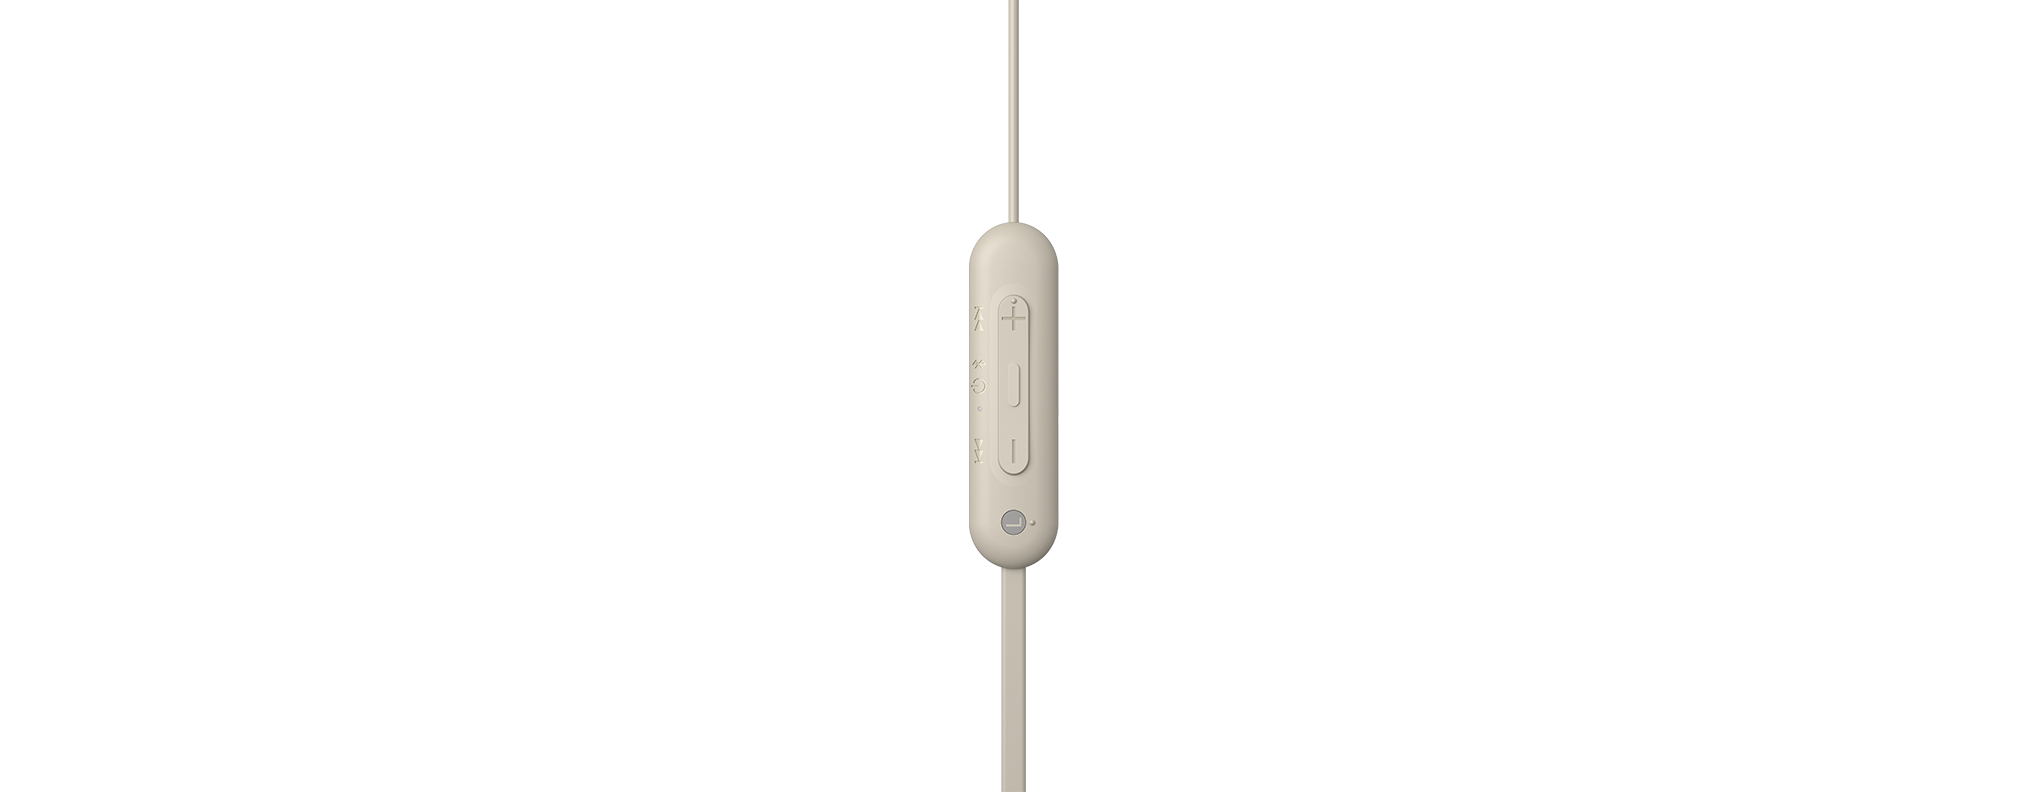 Bluetooth SONY Kopfhörer Cremefarben WI-C100, In-ear